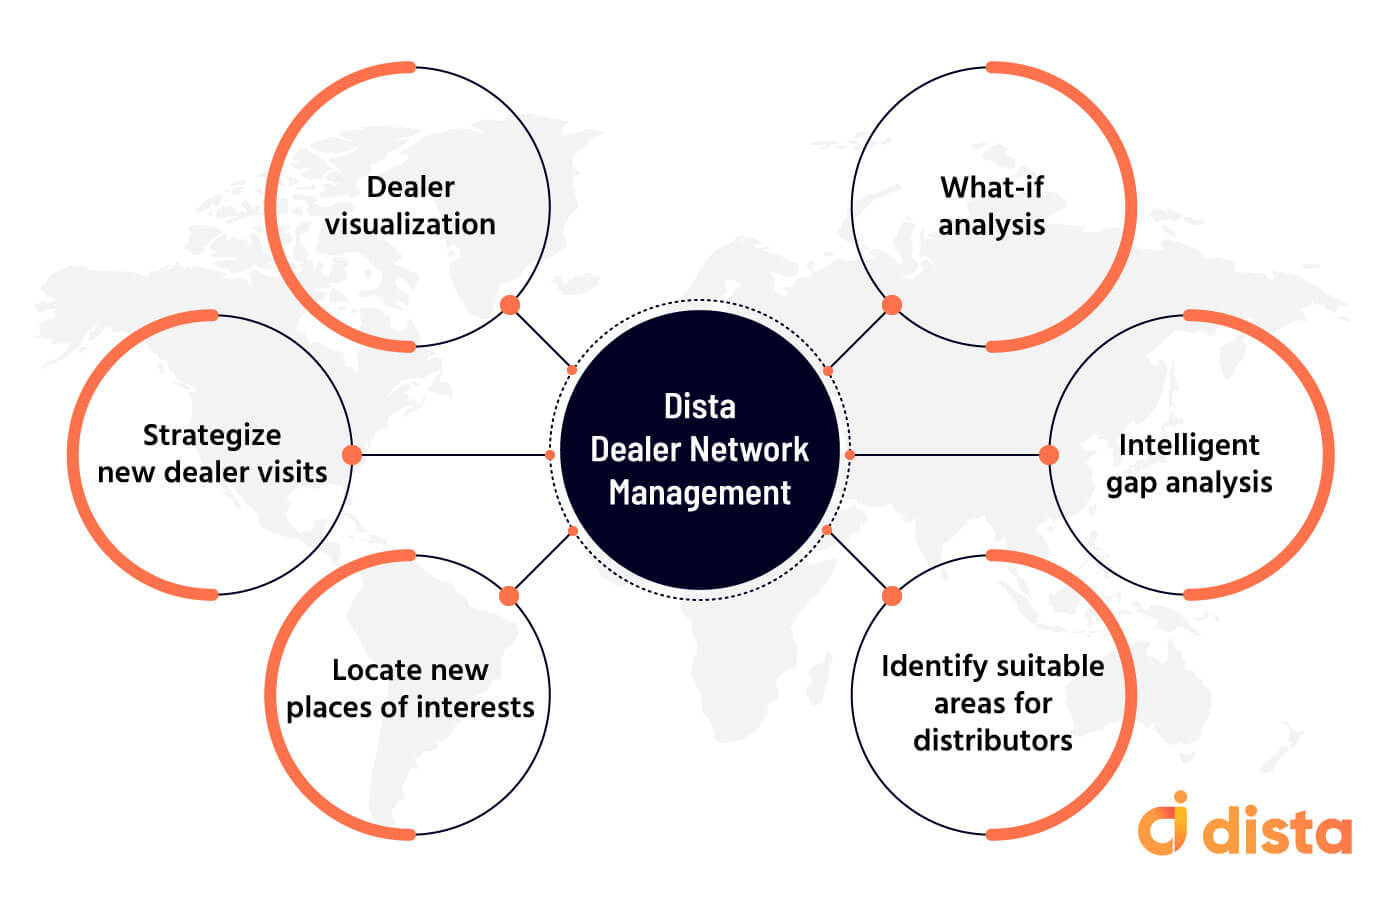 Dista’s Dealer Network Management